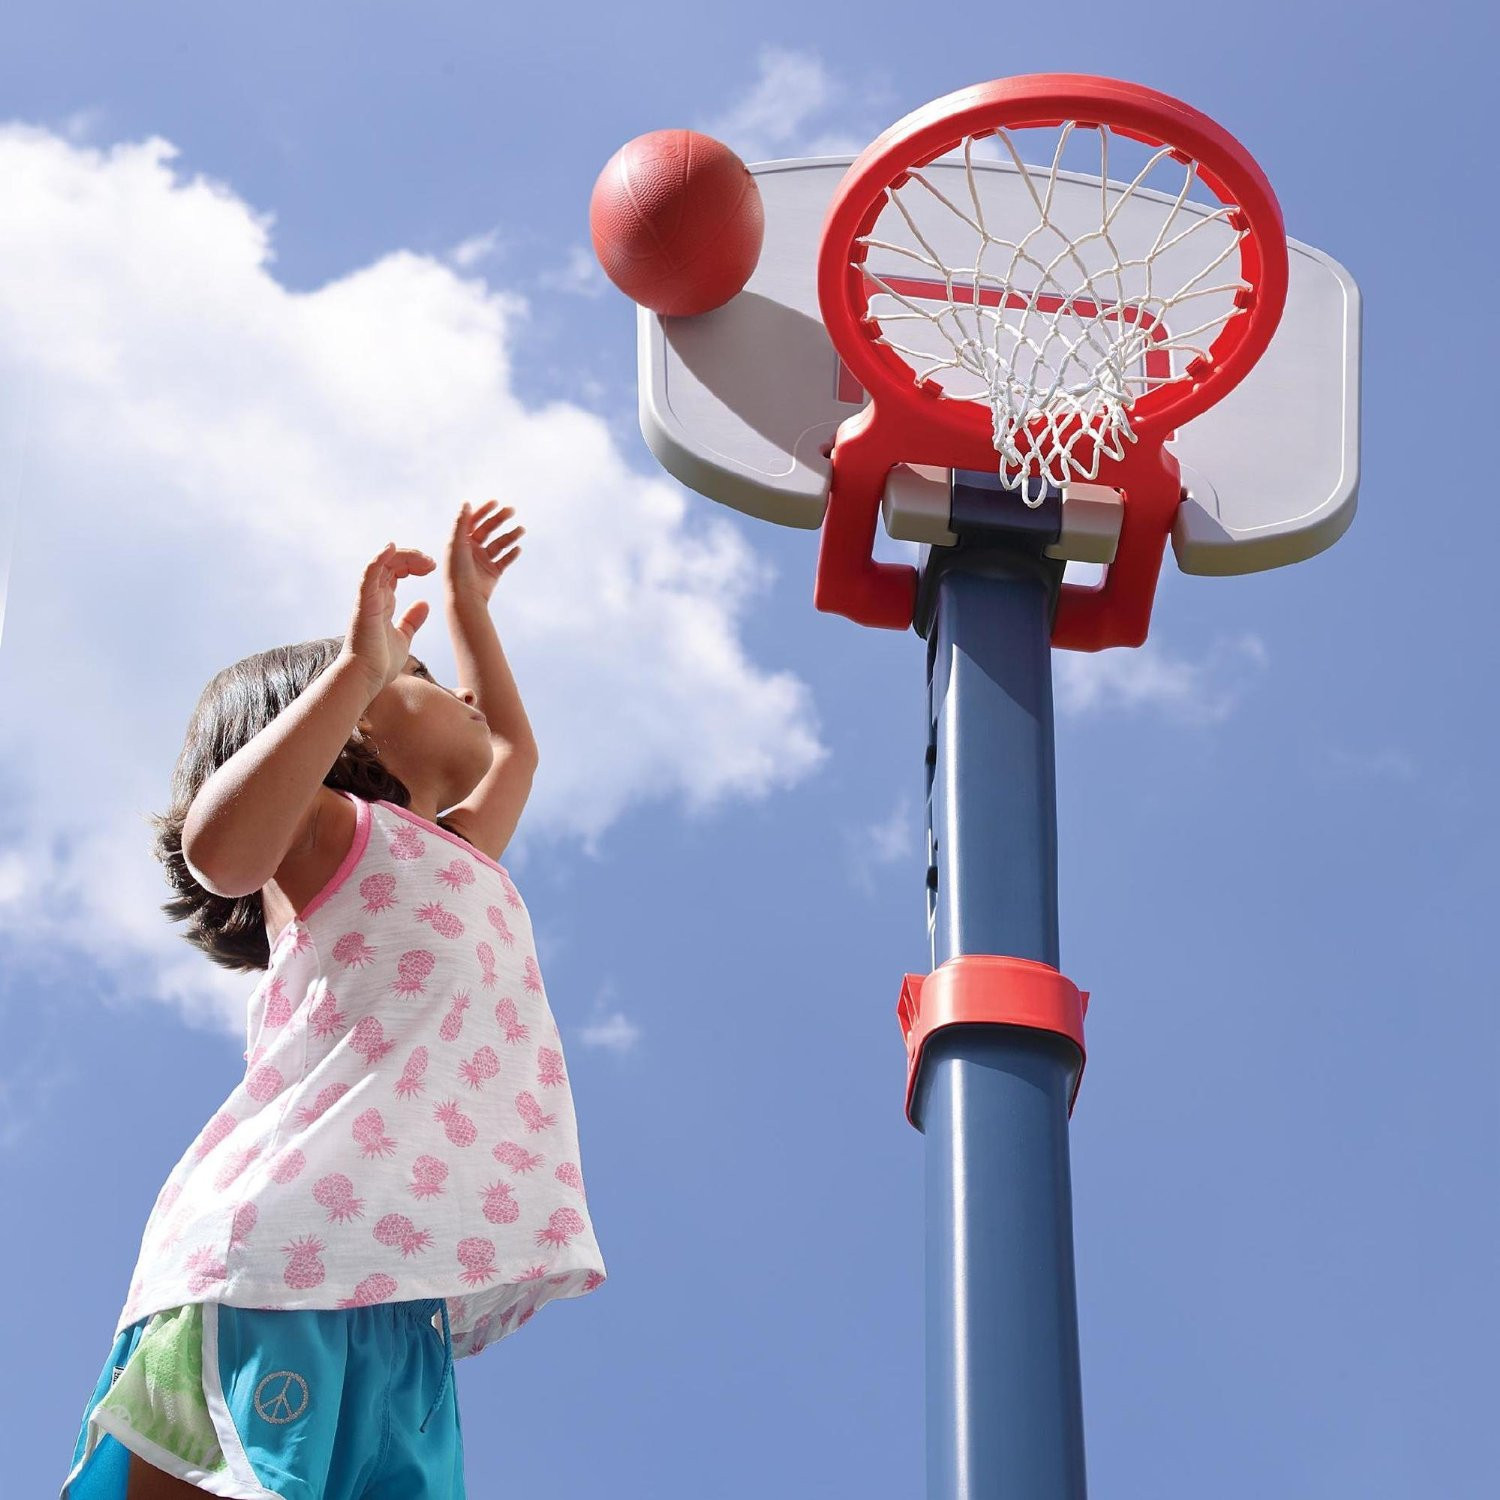 Indoor Kids Basketball Hoops
 Buy Adjustable Basketball Hoop For Kids Indoor Outdoor